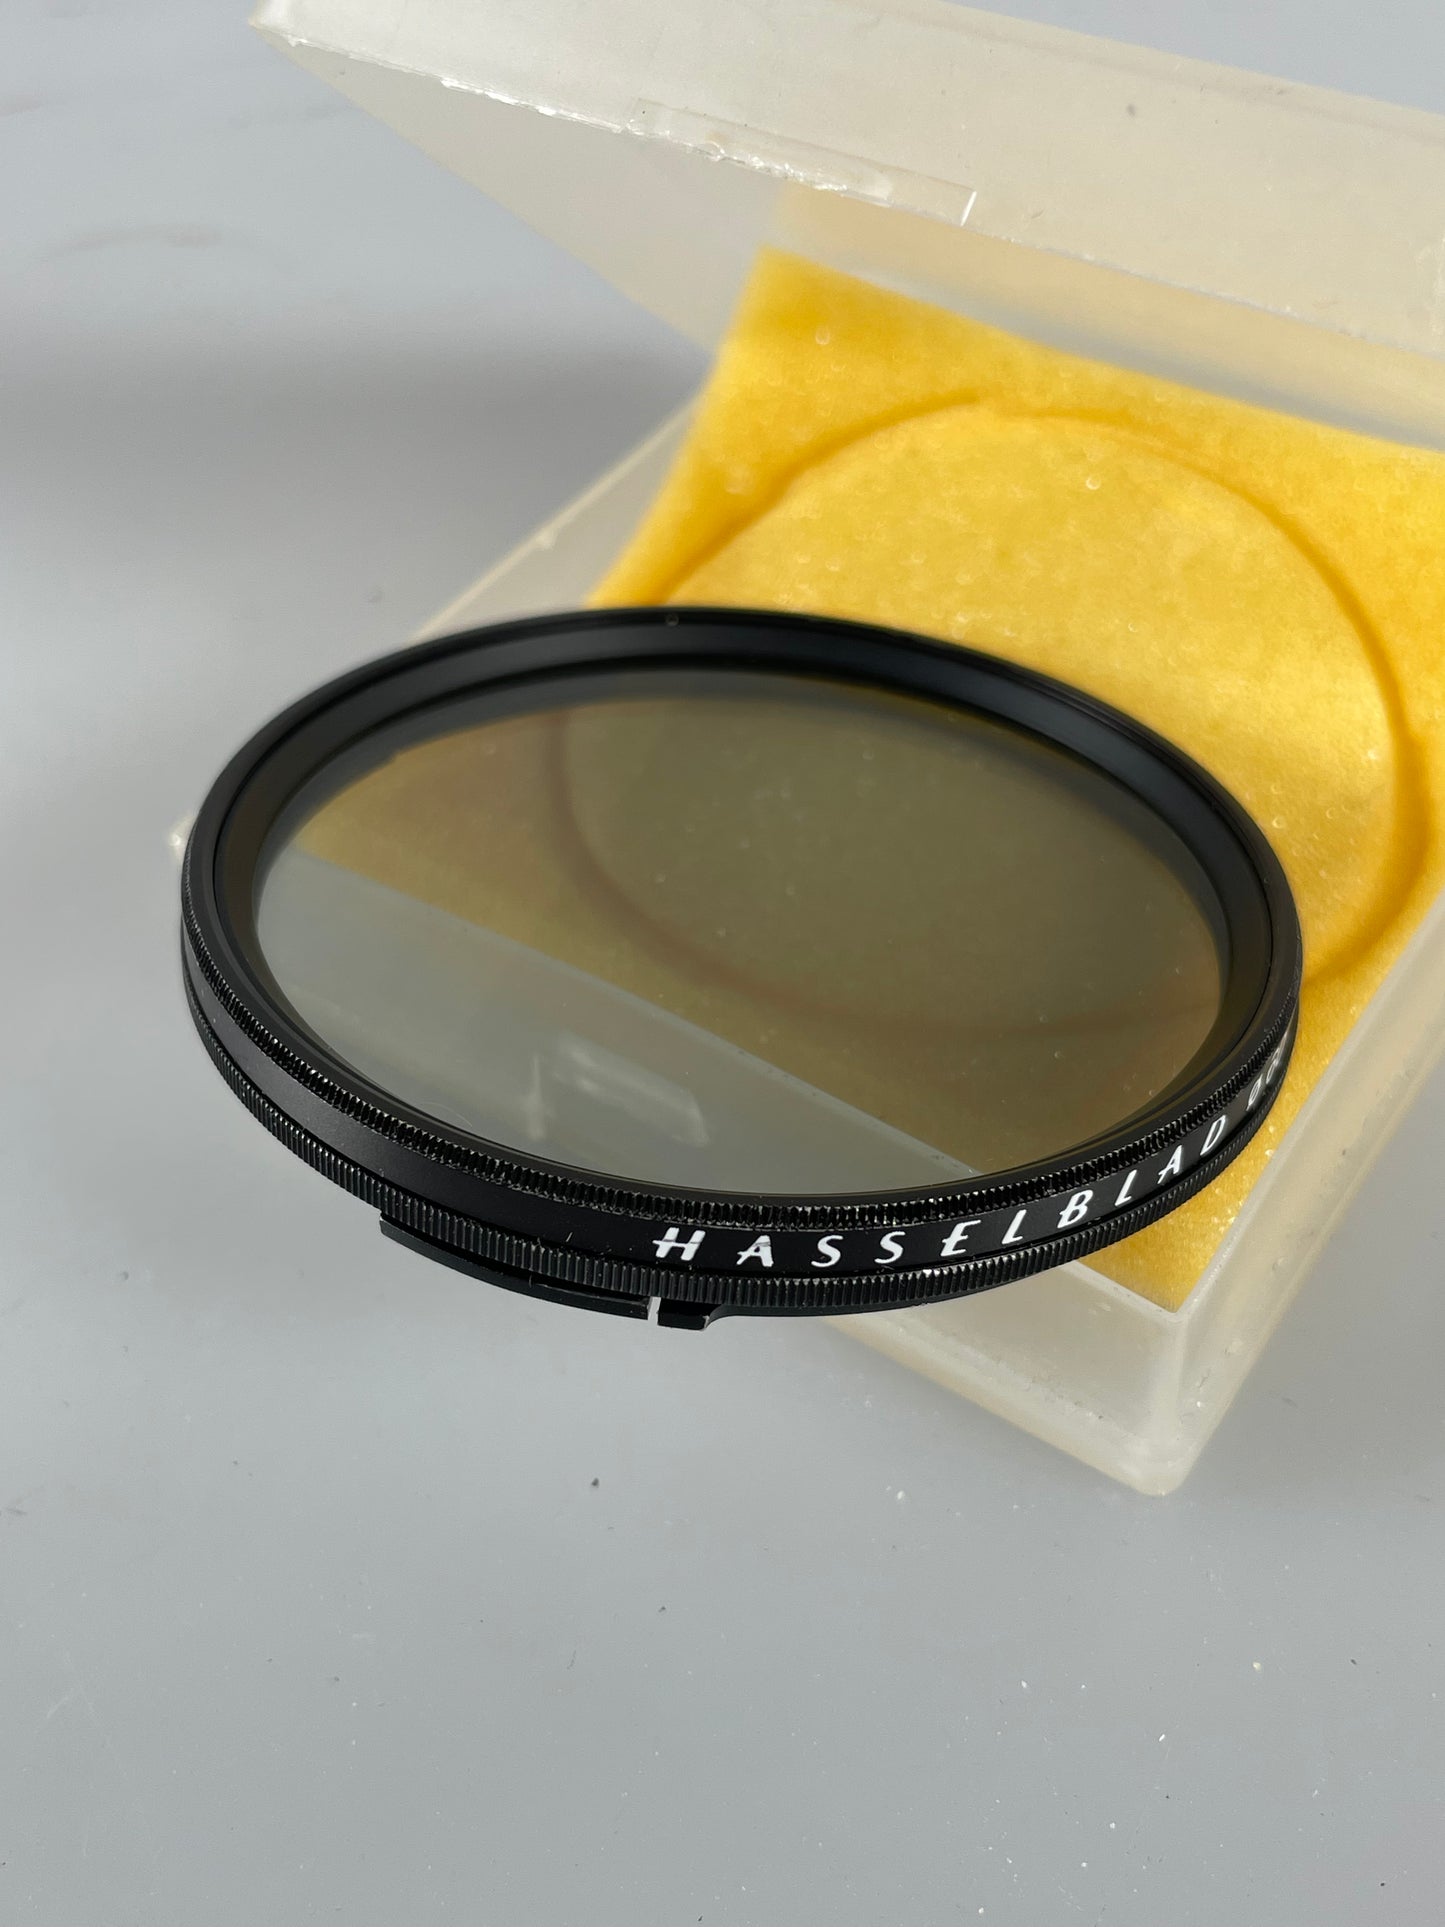 Hasselblad Bay 60 CF 3X PL -1.5 lin Polarizer Filter 51603